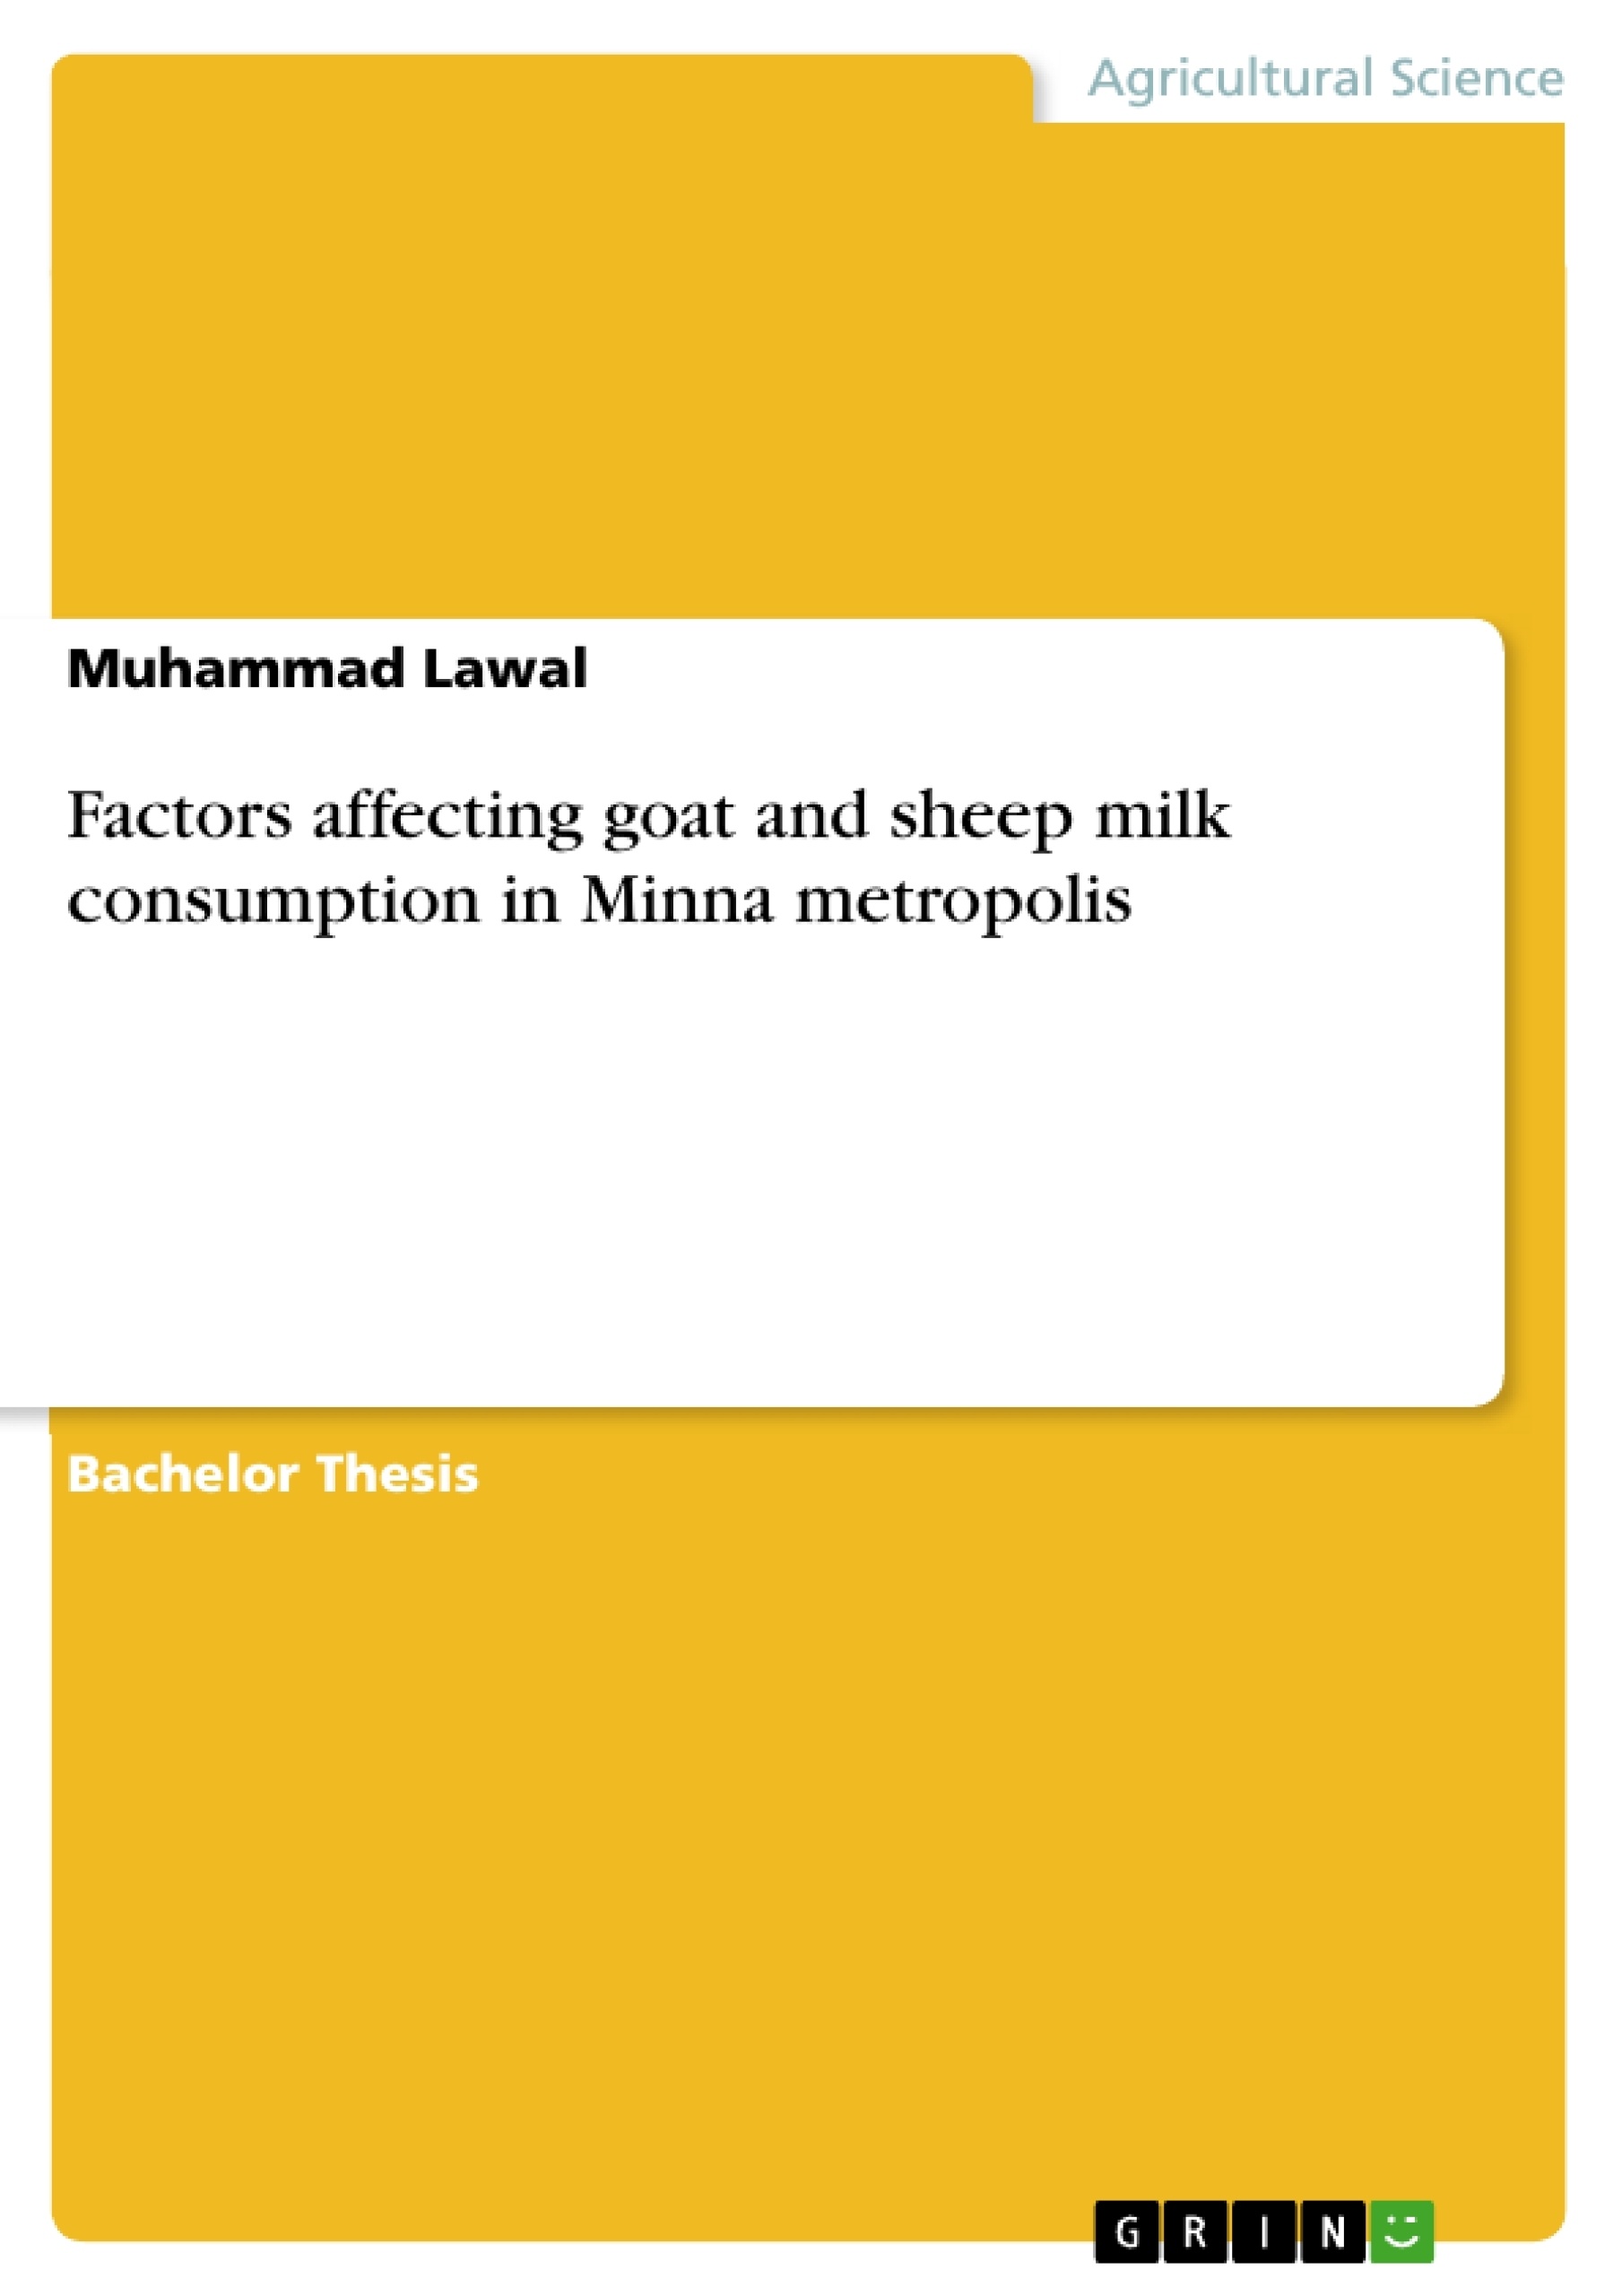 Title: Factors affecting goat and sheep milk consumption in Minna metropolis